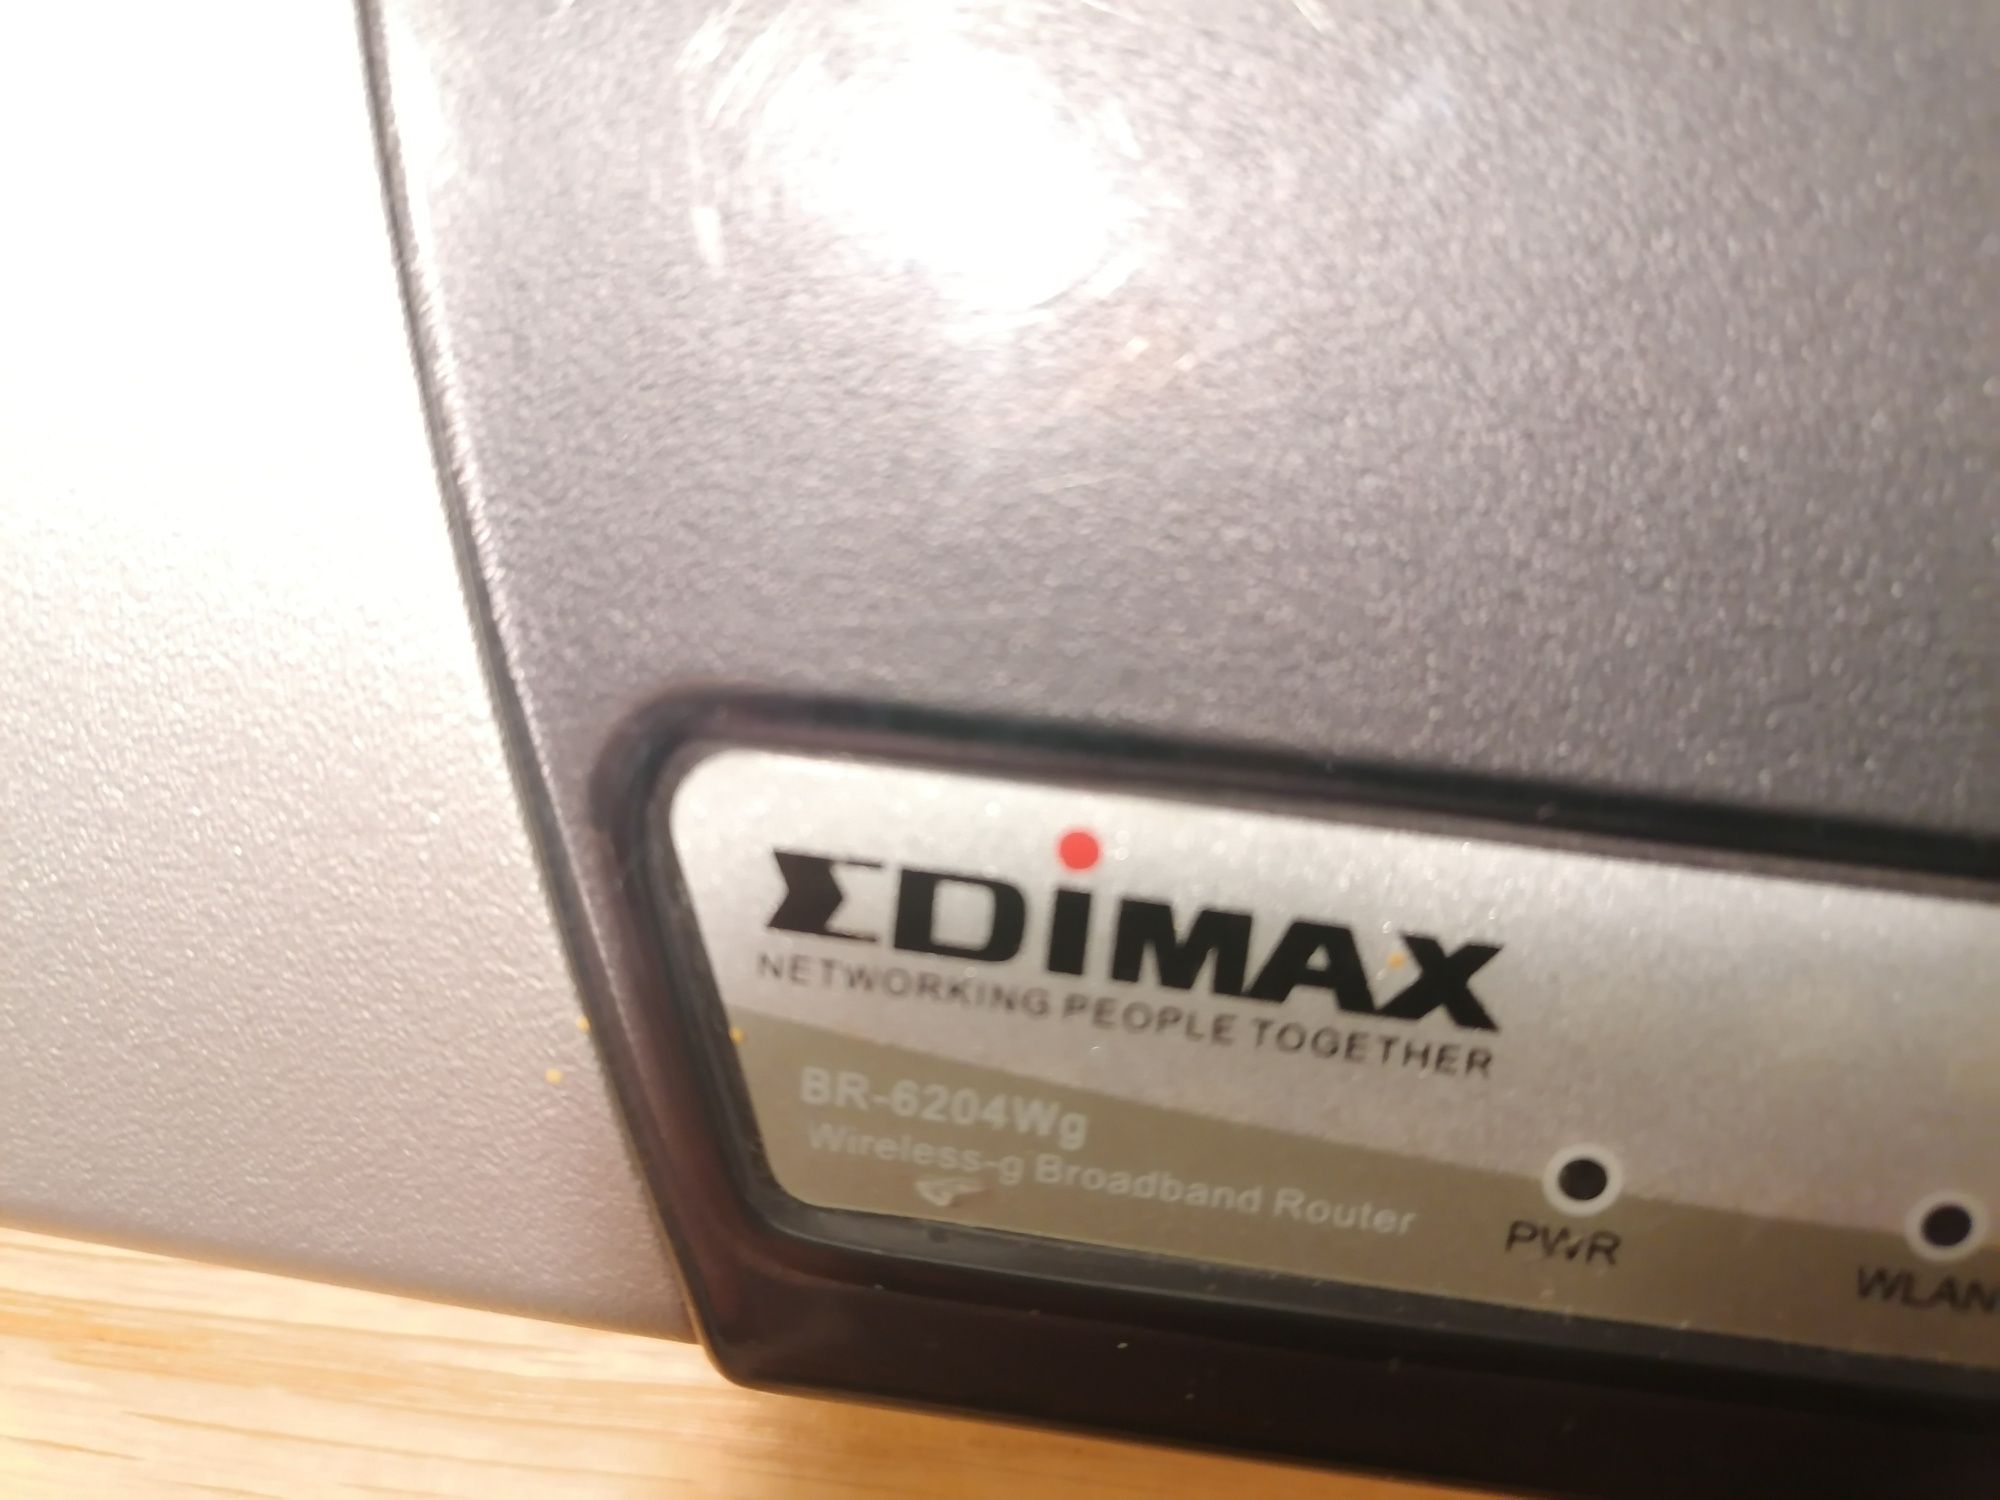 Router Edimax BR-6204Wg